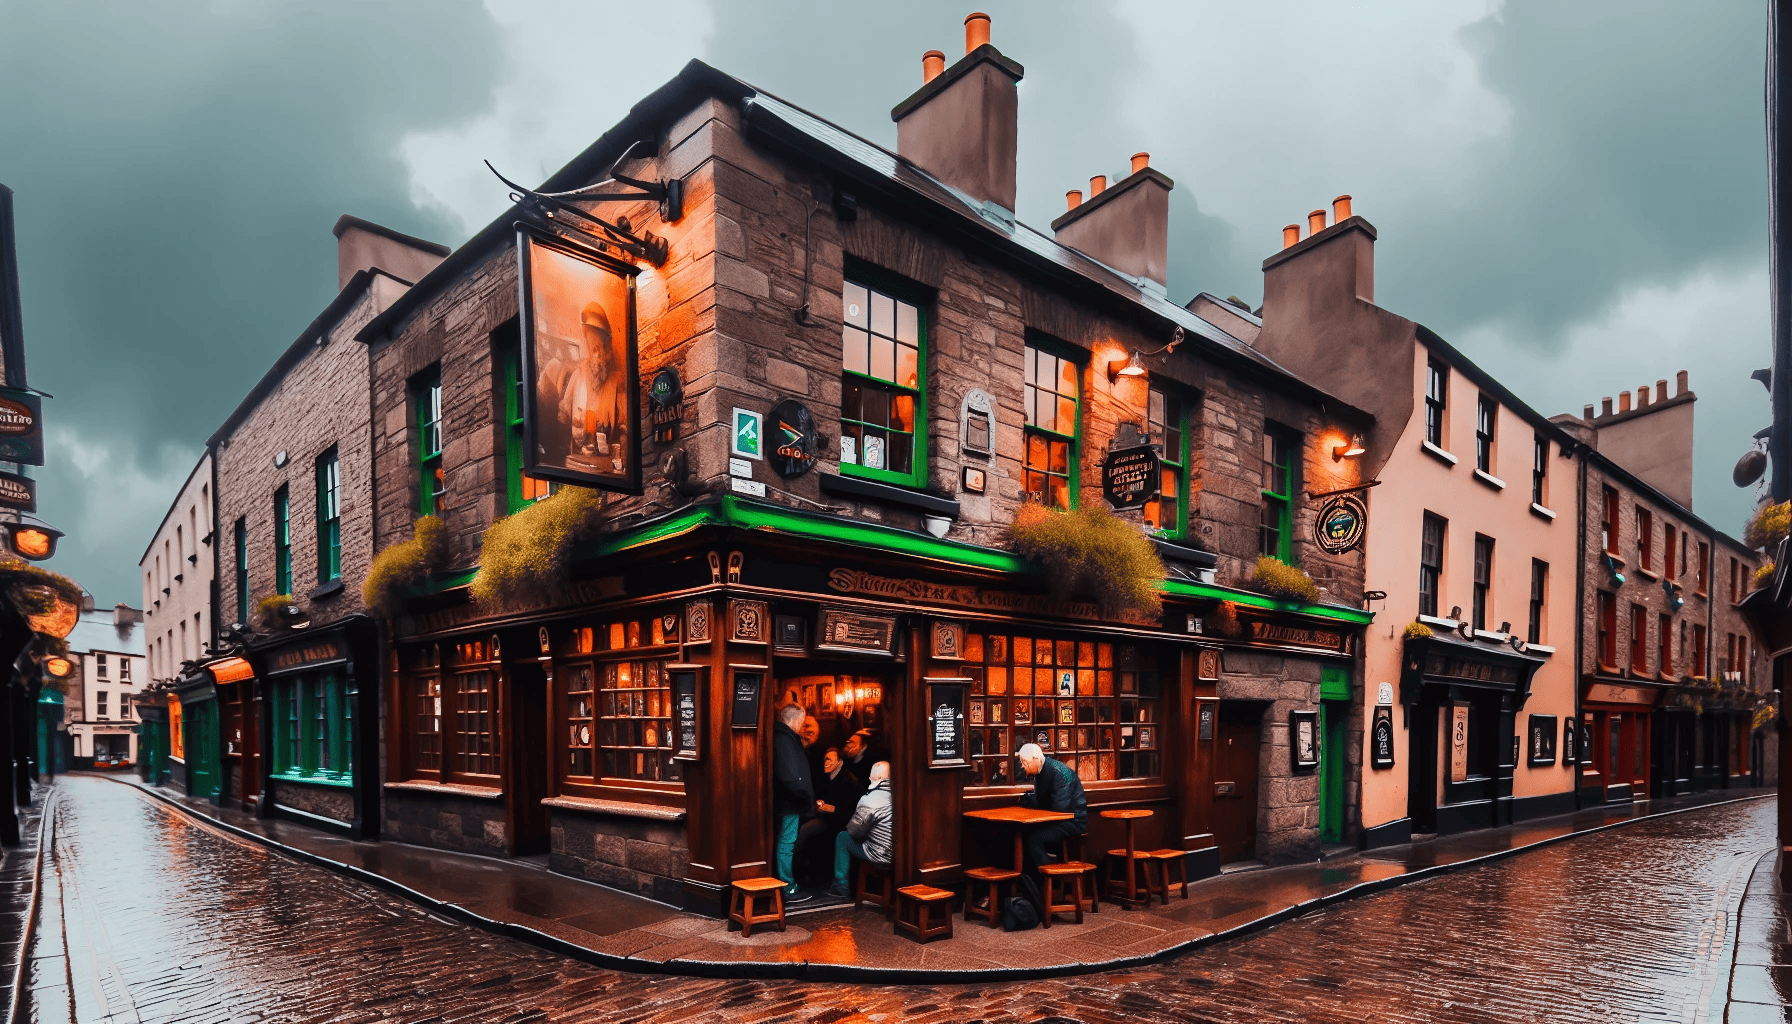 A cozy scene of a traditional Irish pub on a rainy day